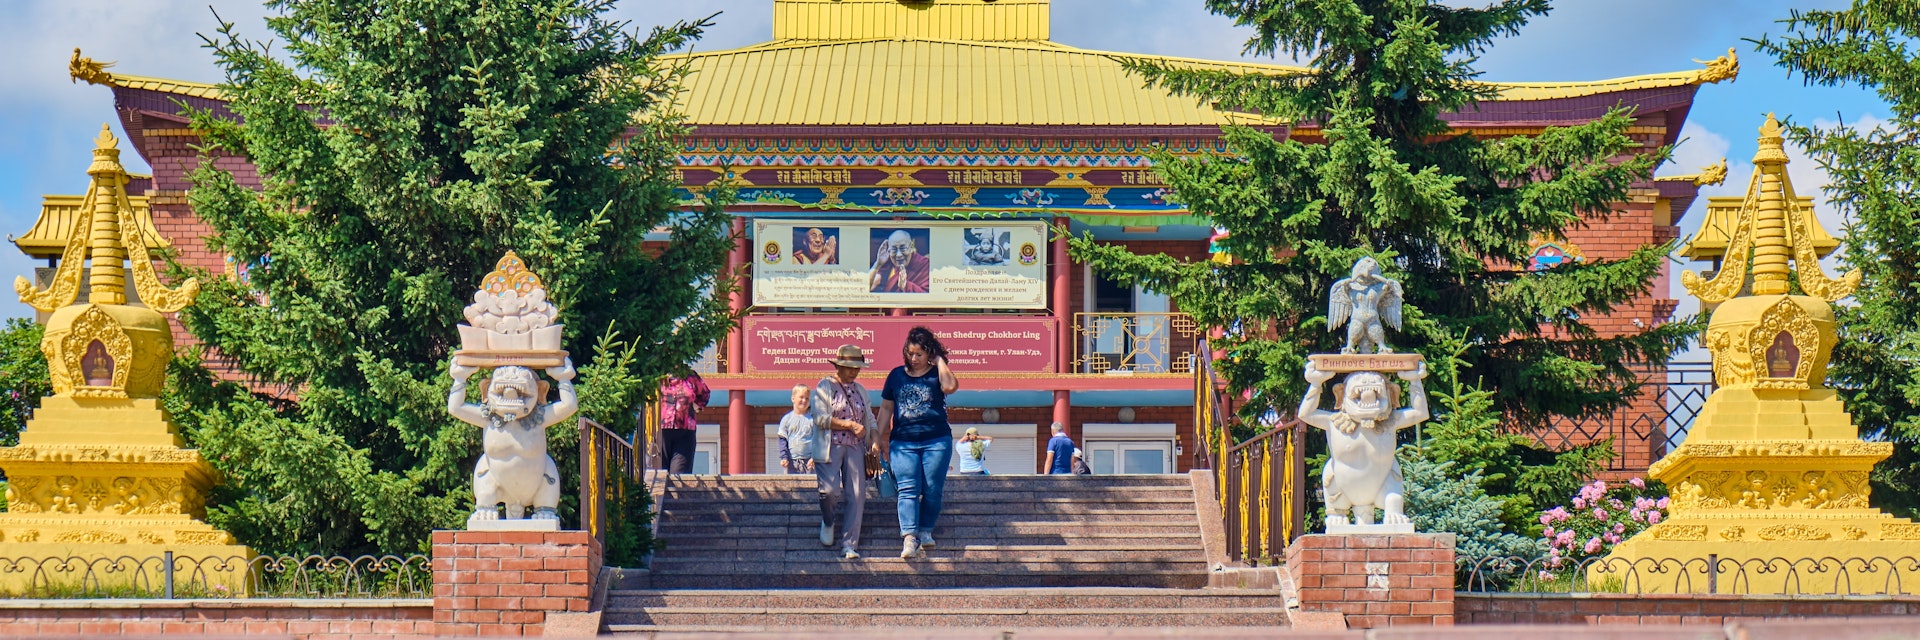 Ulan-Ude, Russia - July 05, 2022: Datsan Rinpoche Bagsha in Ulan-Ude city of the Republic of Buryatia, Russia; Shutterstock ID 2279738025; your: Sloane Tucker; gl: 65050; netsuite: Online Editorial; full: POI
2279738025